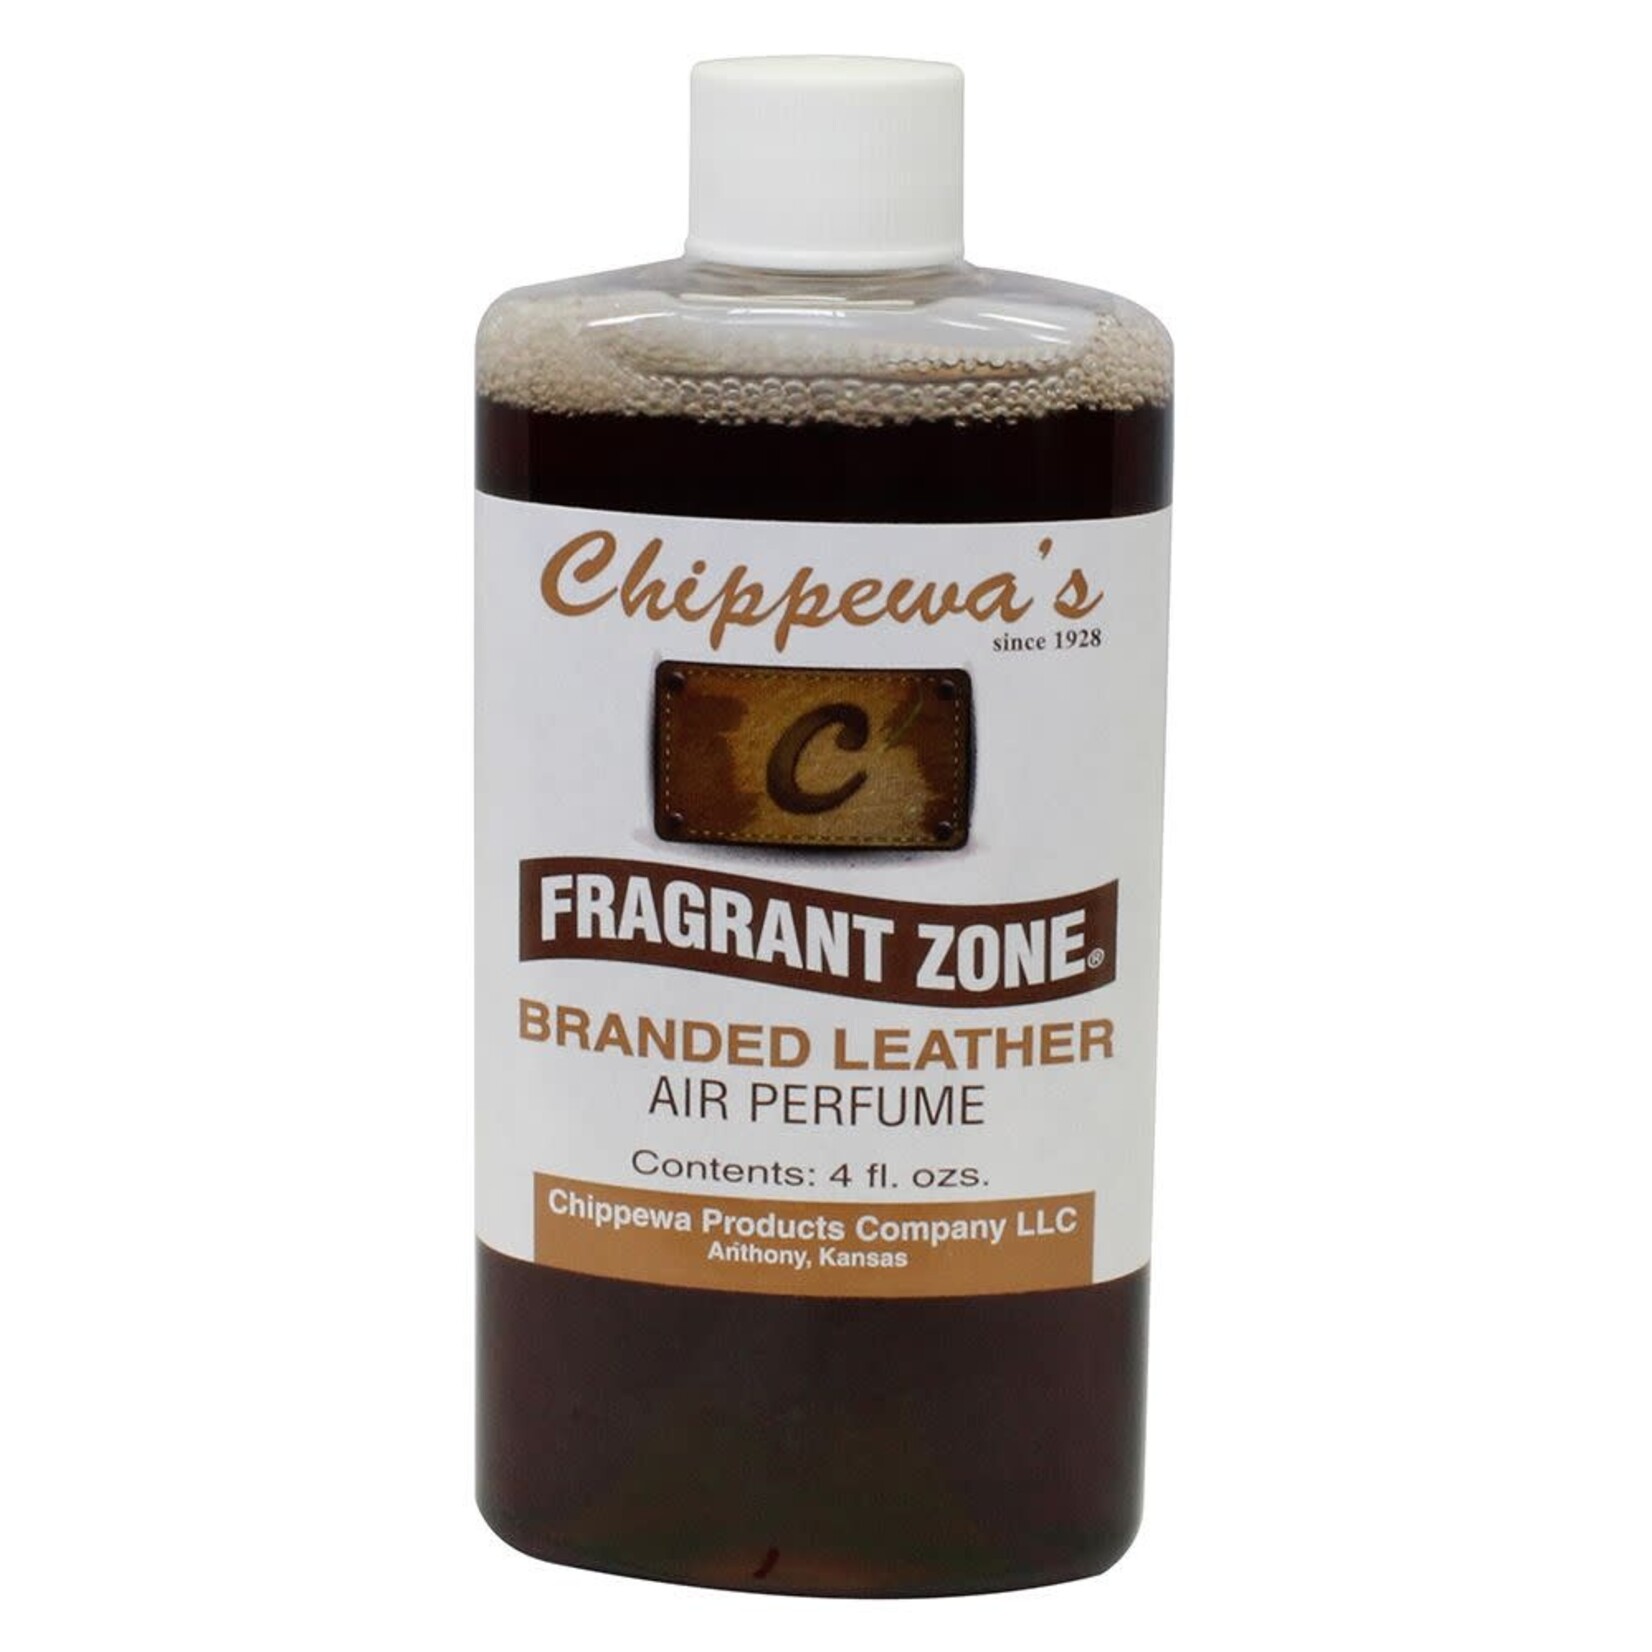 Chippewa's Fragrant Zone Air Freshener Branded Leather